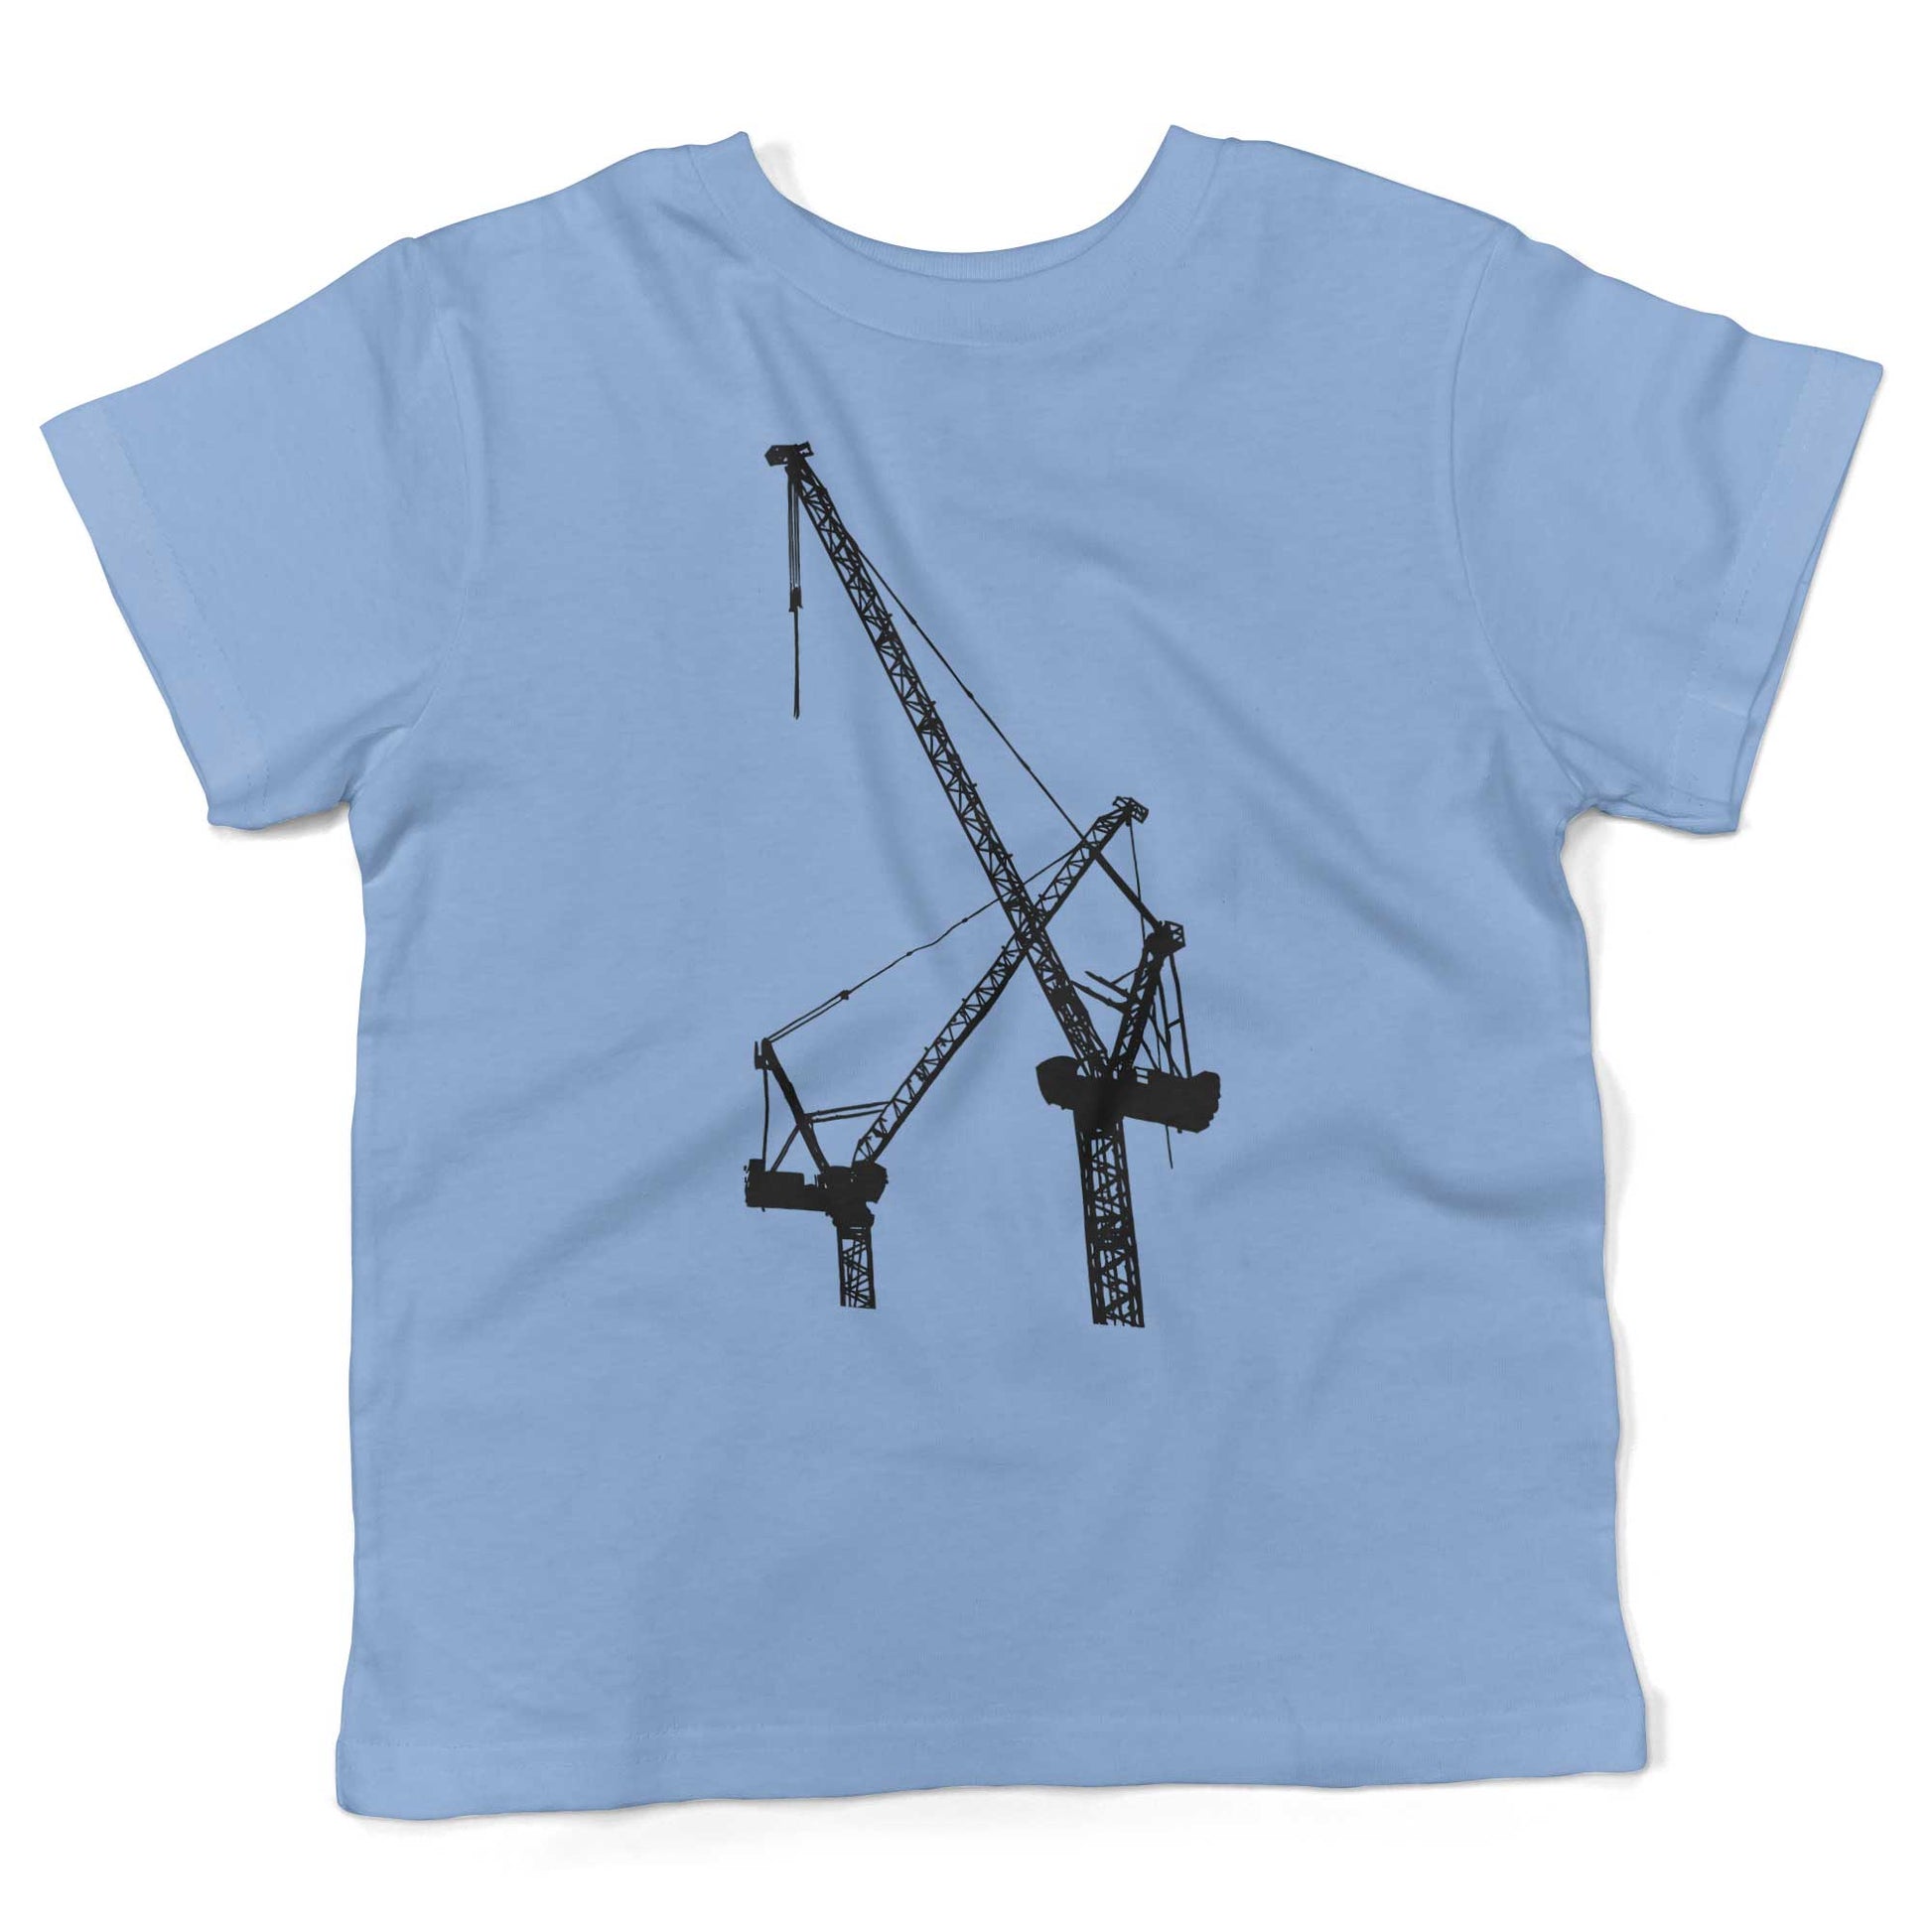 Construction Cranes Toddler Shirt-Organic Baby Blue-2T